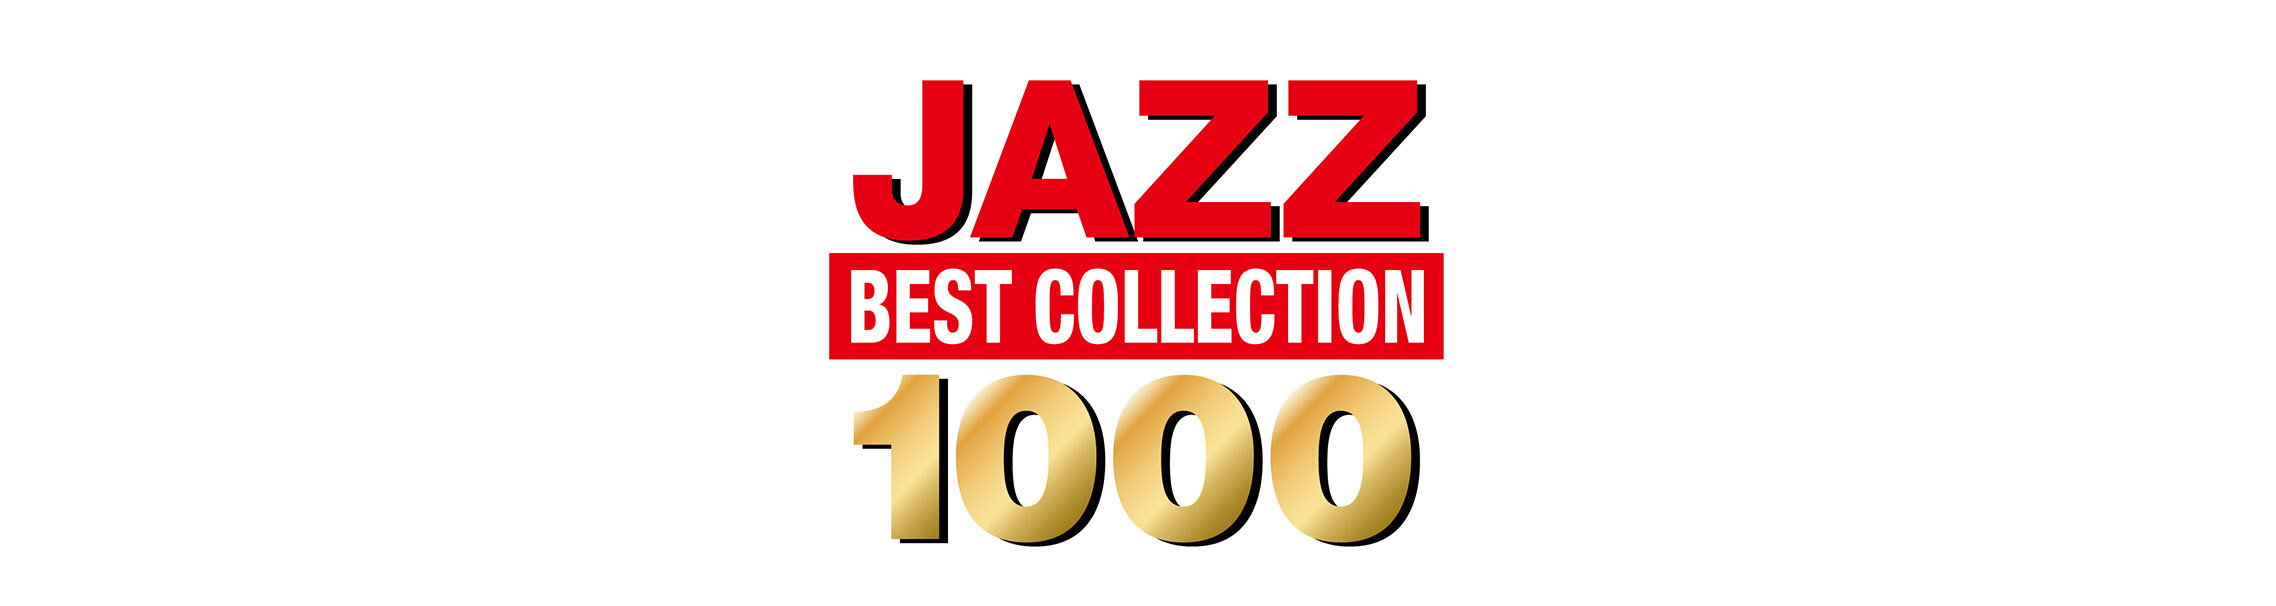 JAZZ BEST COLLECTION 1000「第8弾 2013年7月24日発売」 | Warner ...